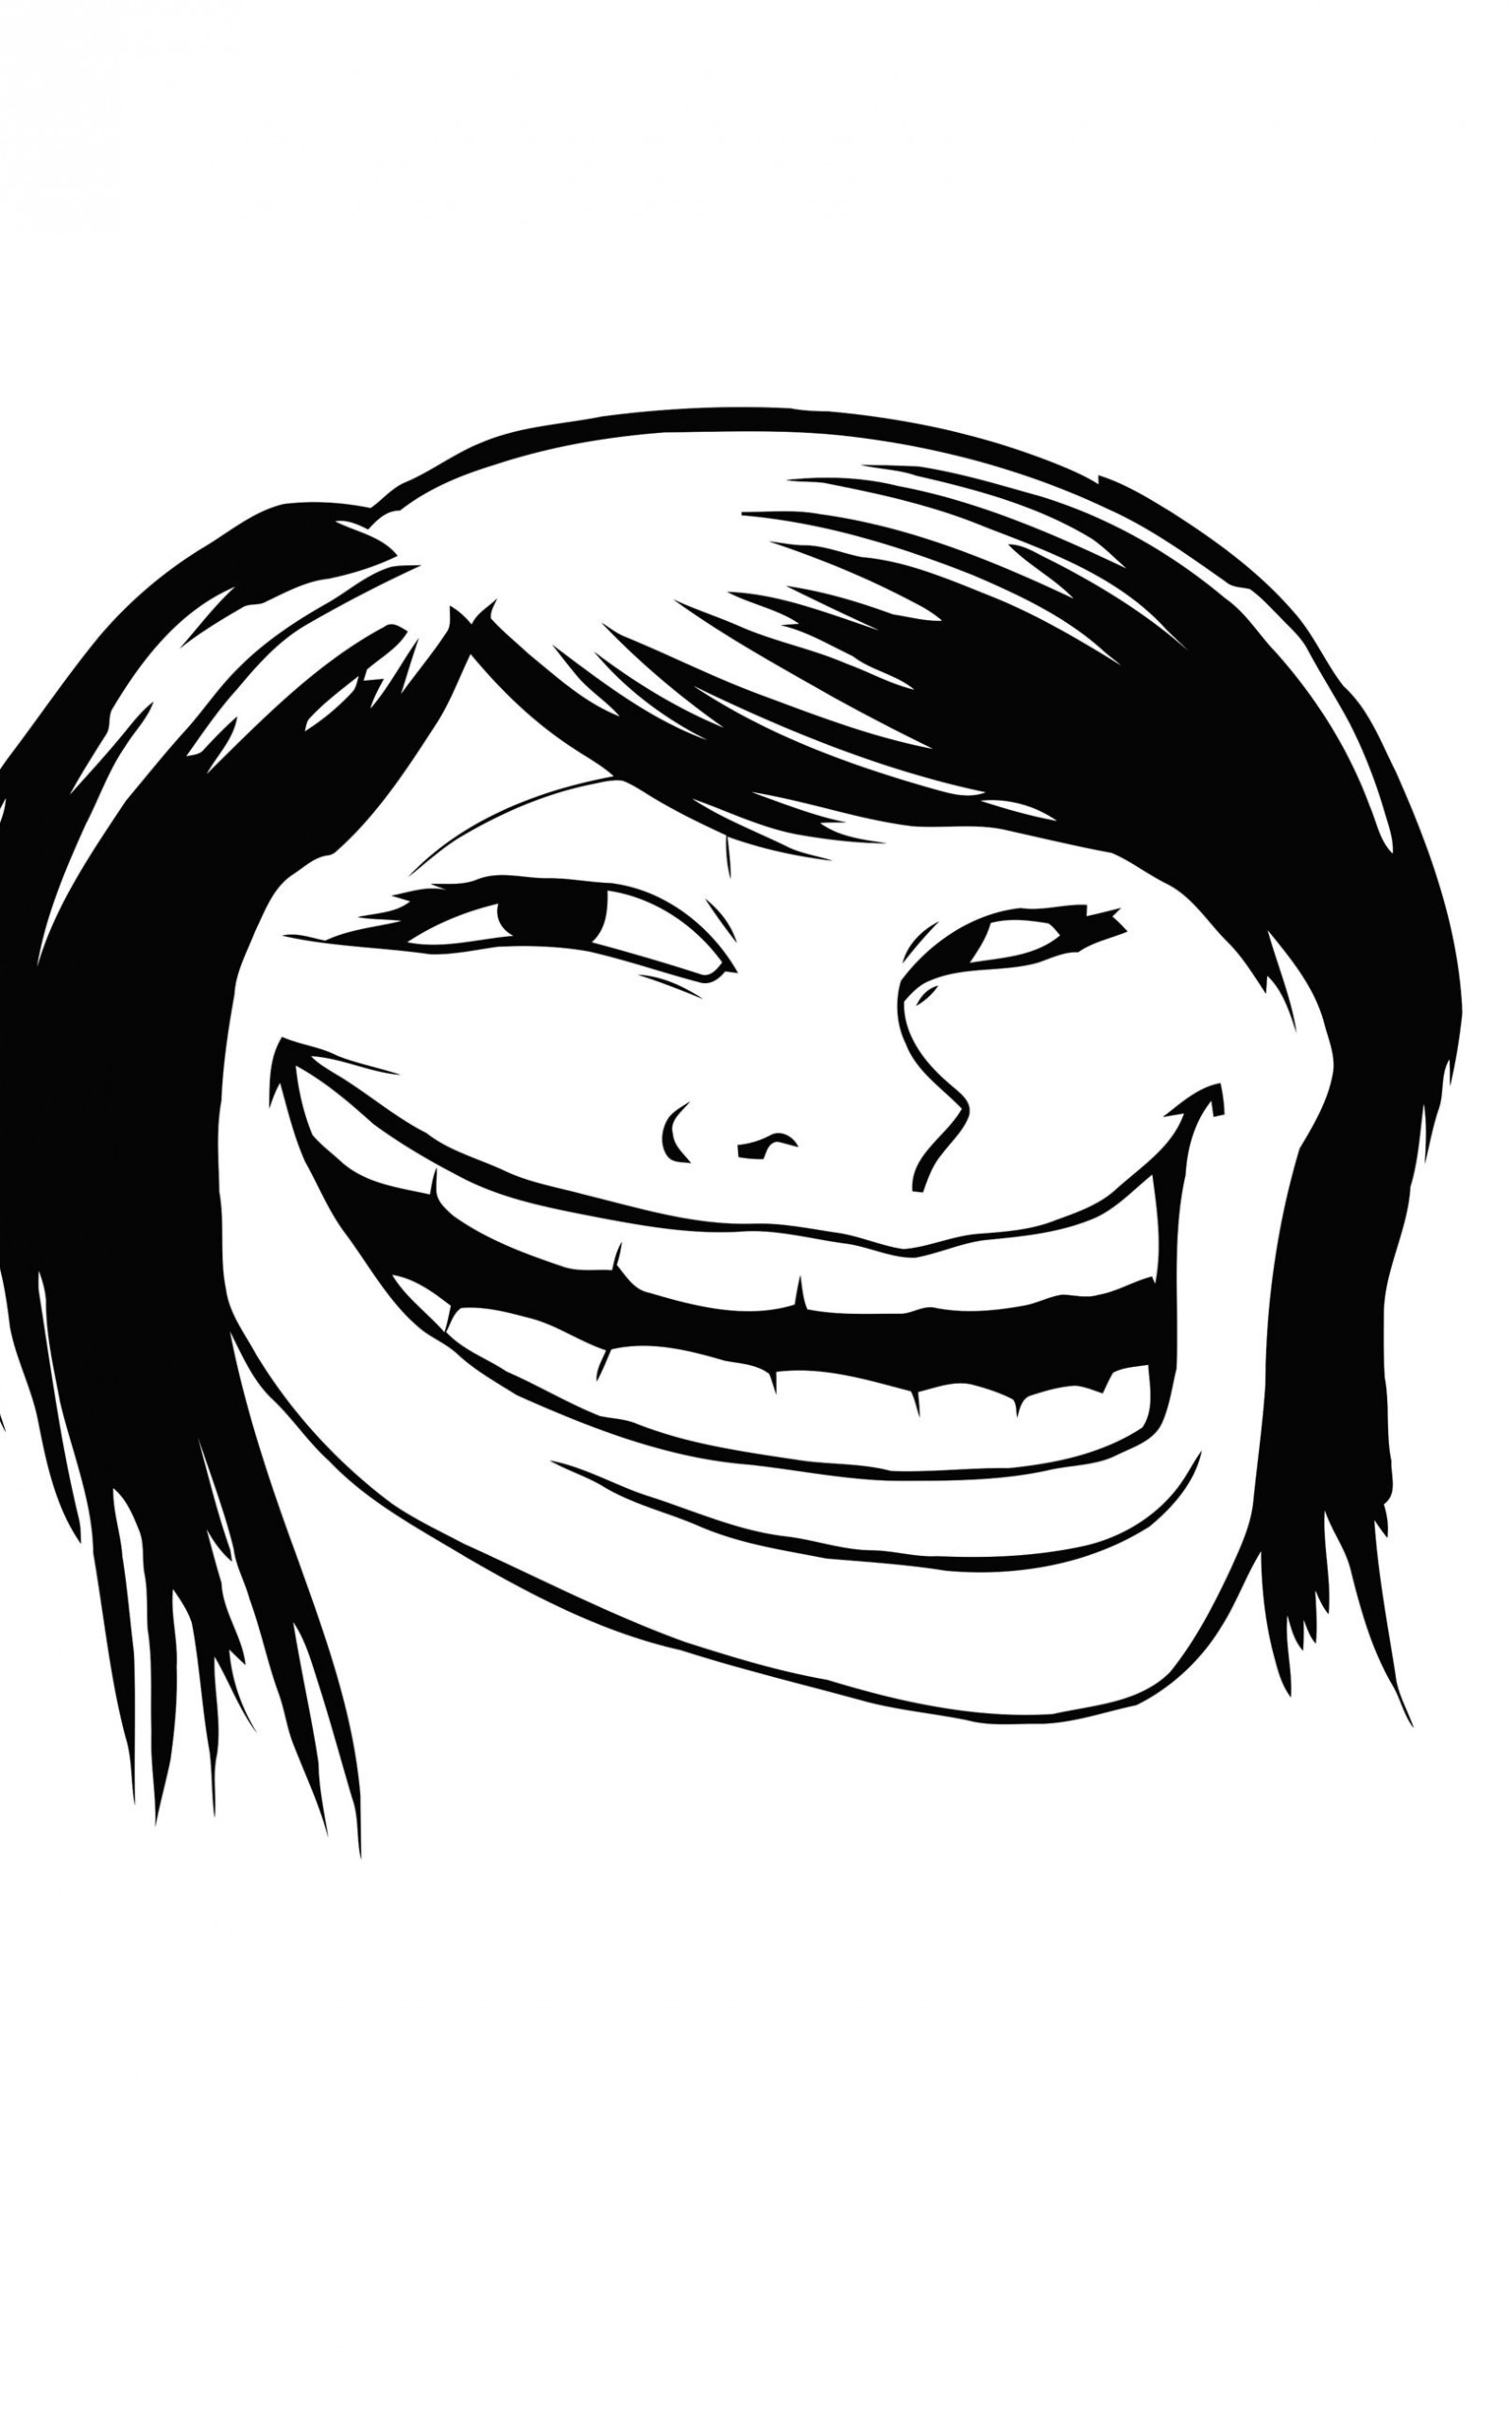 Female Troll Face Meme Wallpaper for Amazon Kindle Fire HDX 8.9